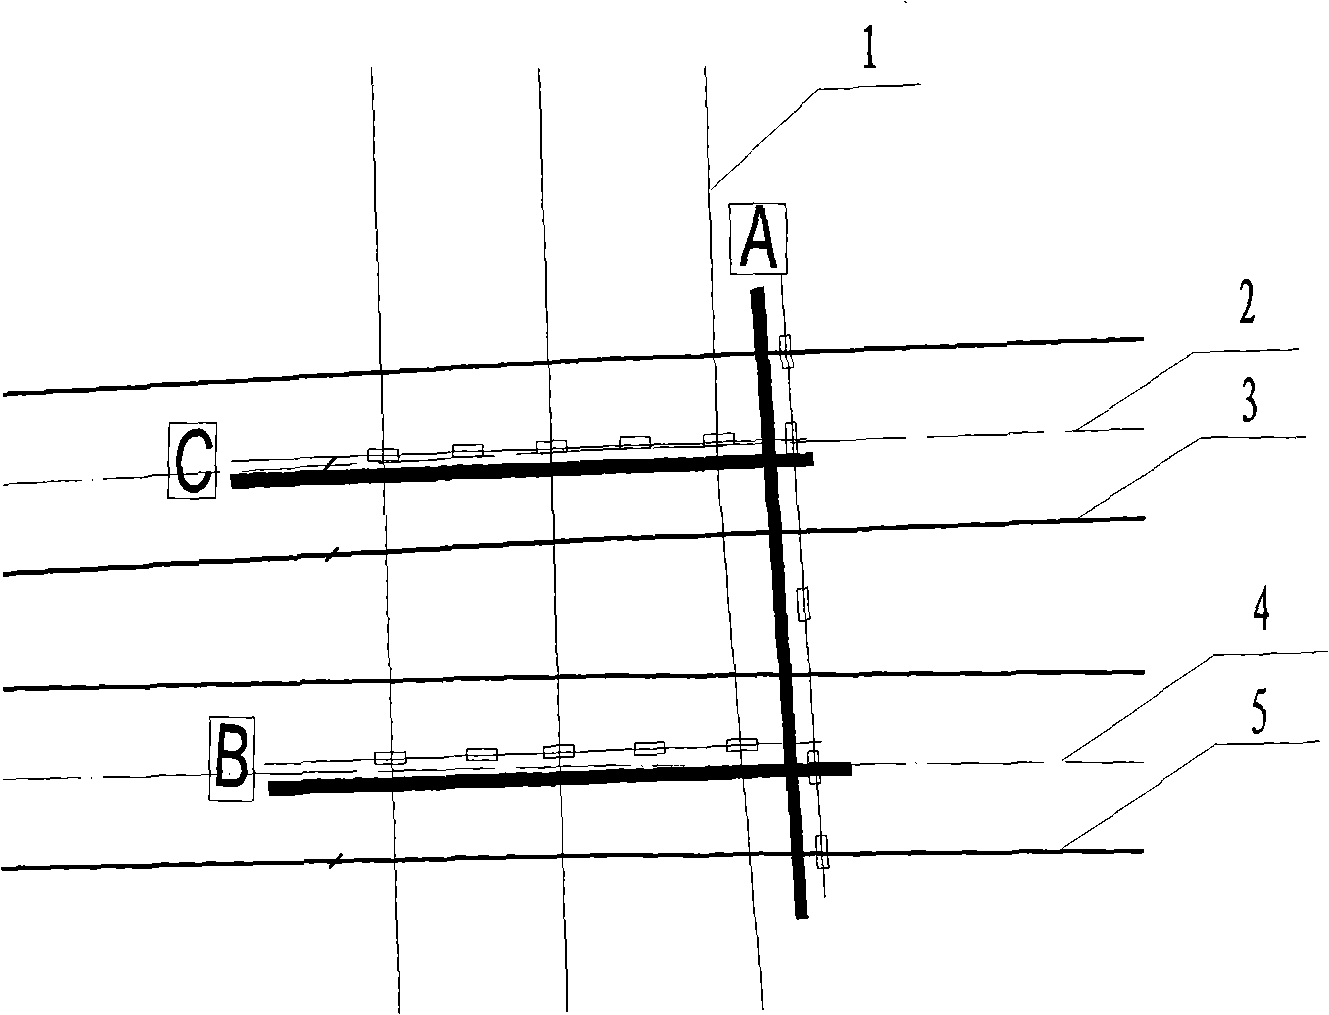 Construction method for embedding inclinometer tube